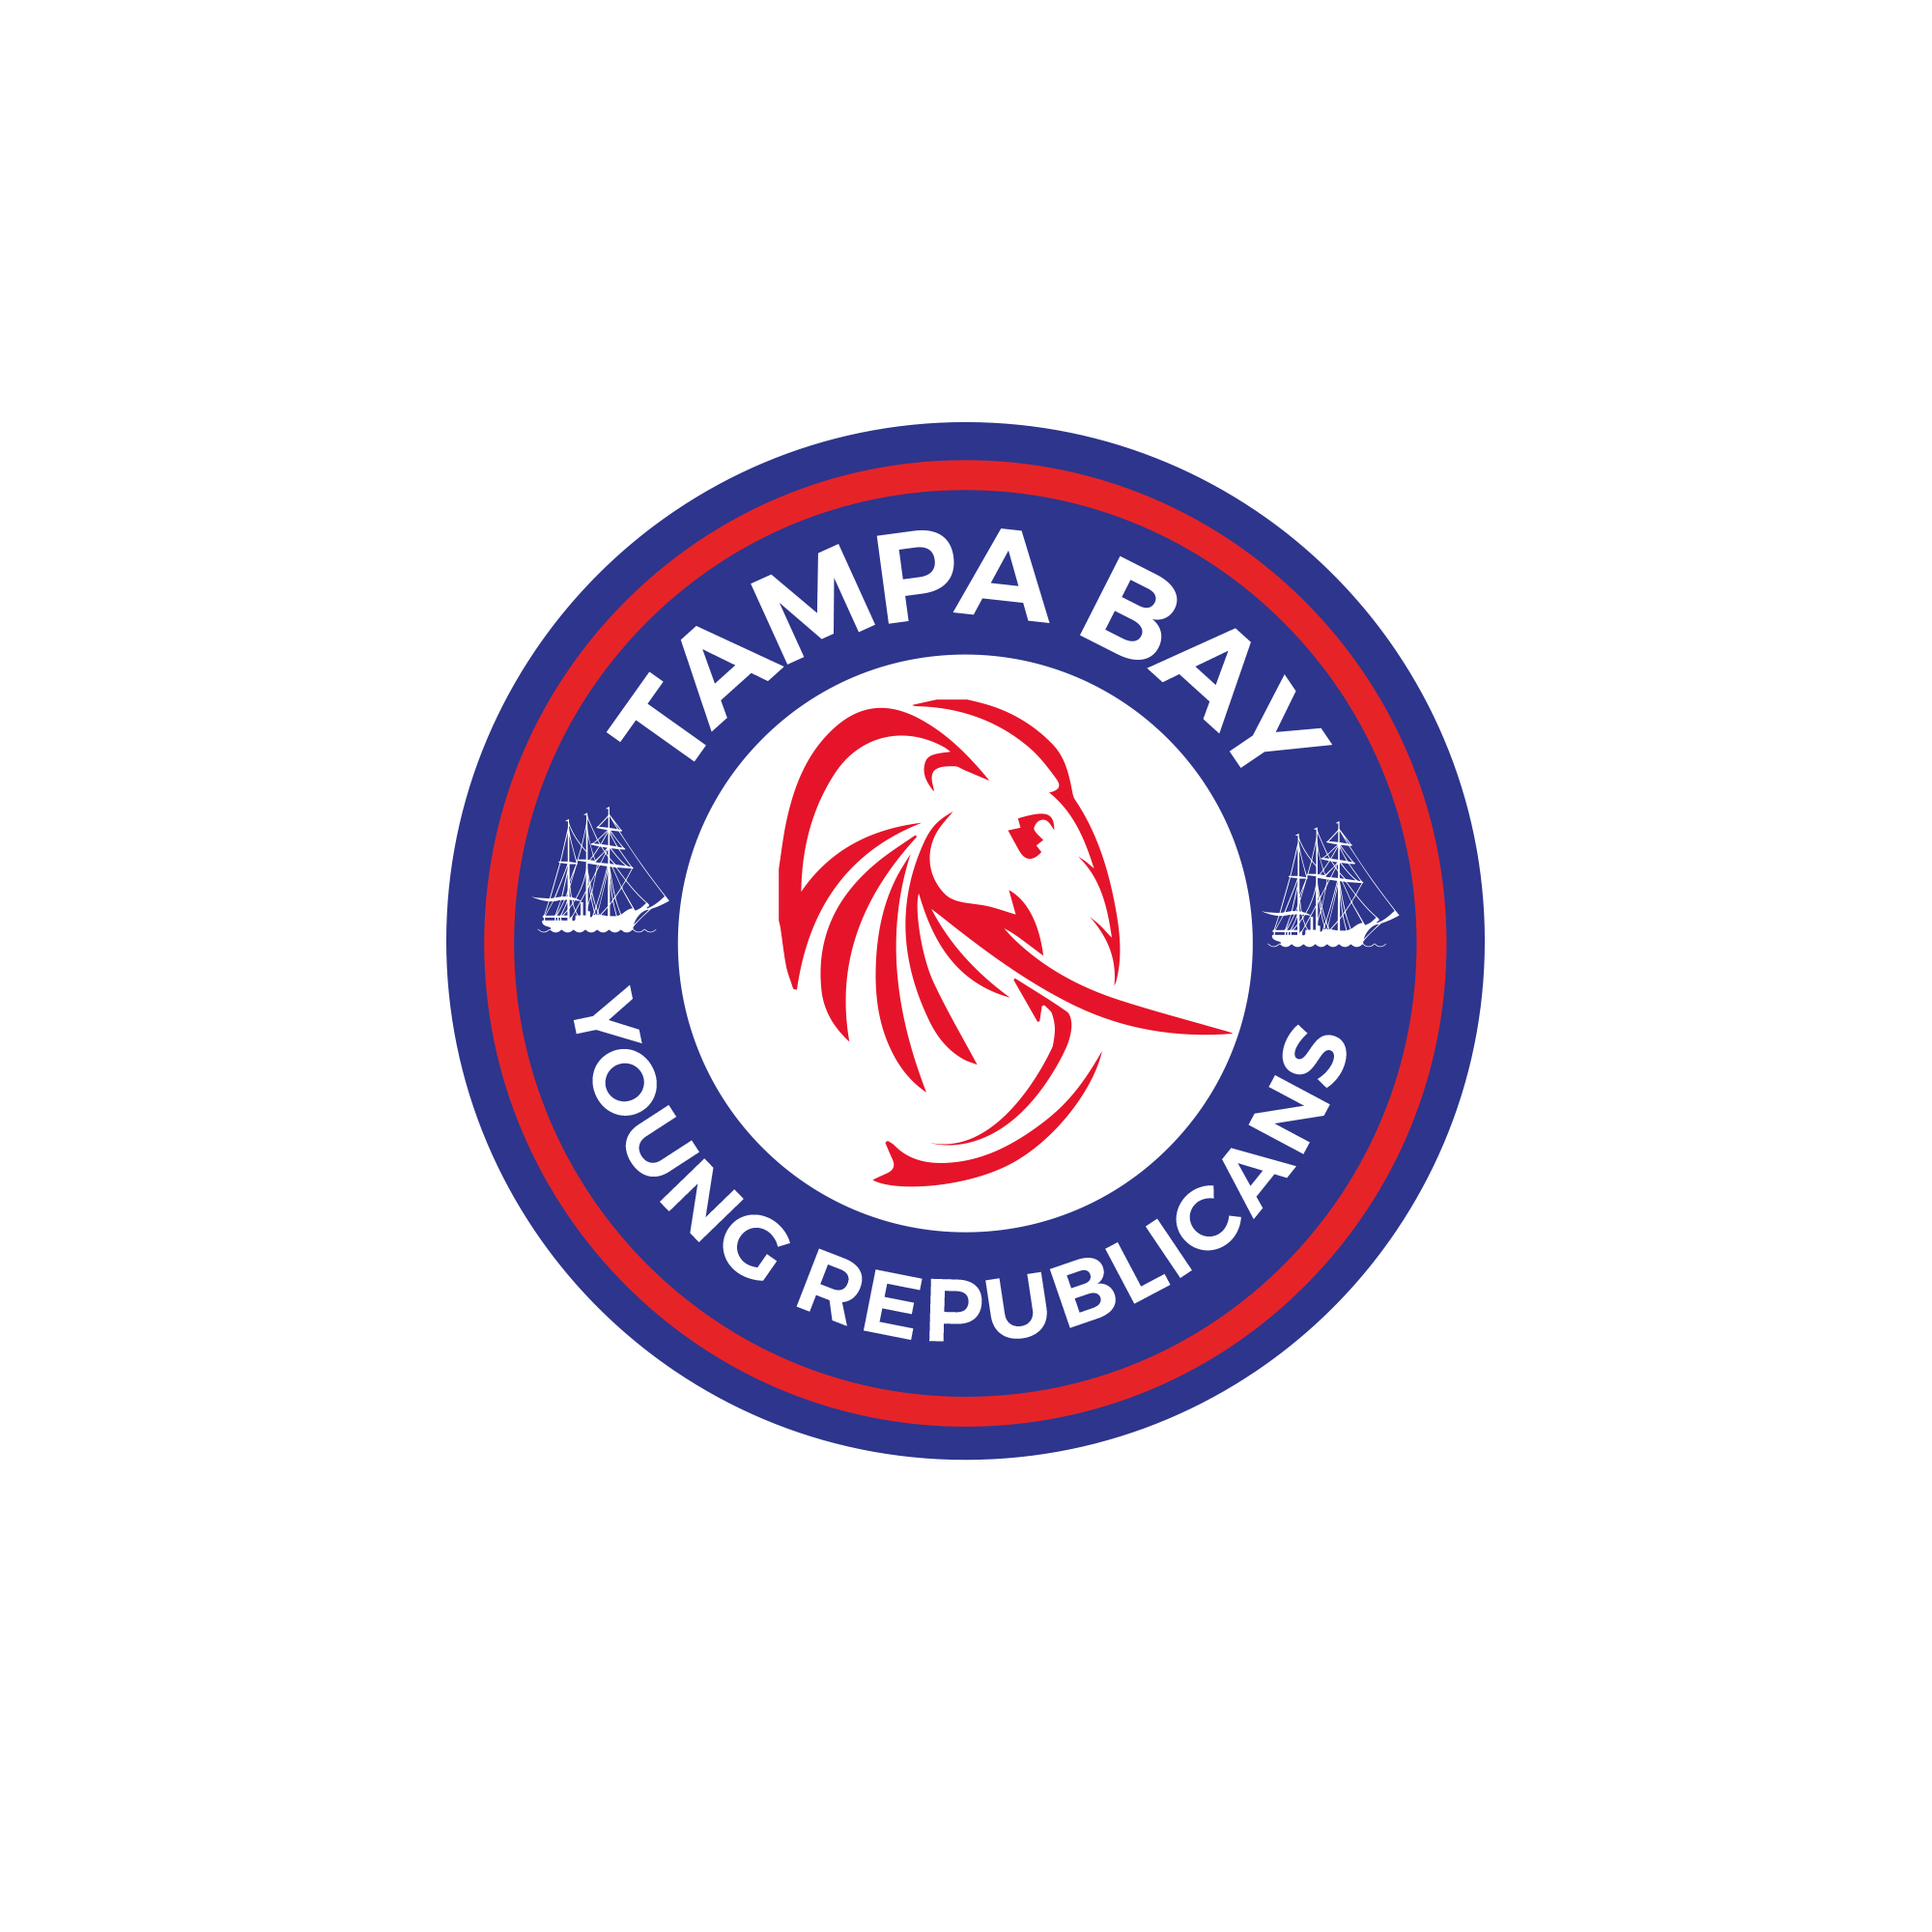 Tampa Bay Young Republicans logo